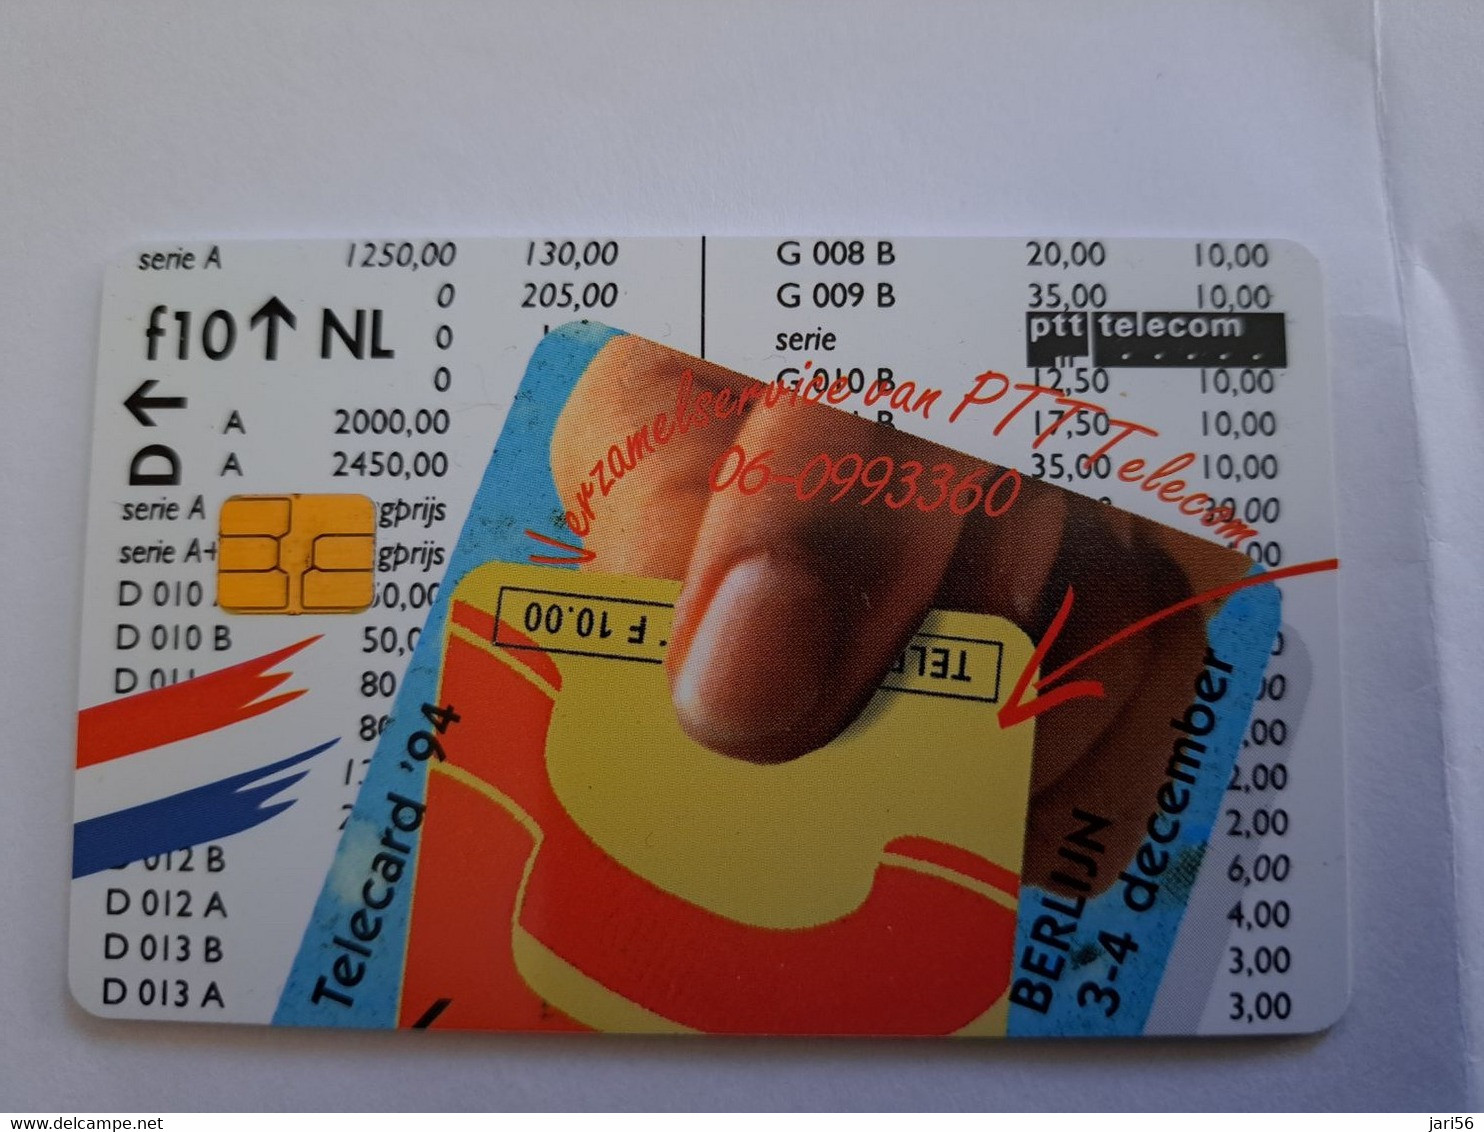 NETHERLANDS CHIPCARD  CKD 002.03   / HFL 10,-  BERLIJN   94 PHONECARD FAIR   /  MINT   ** 11816 ** - Public